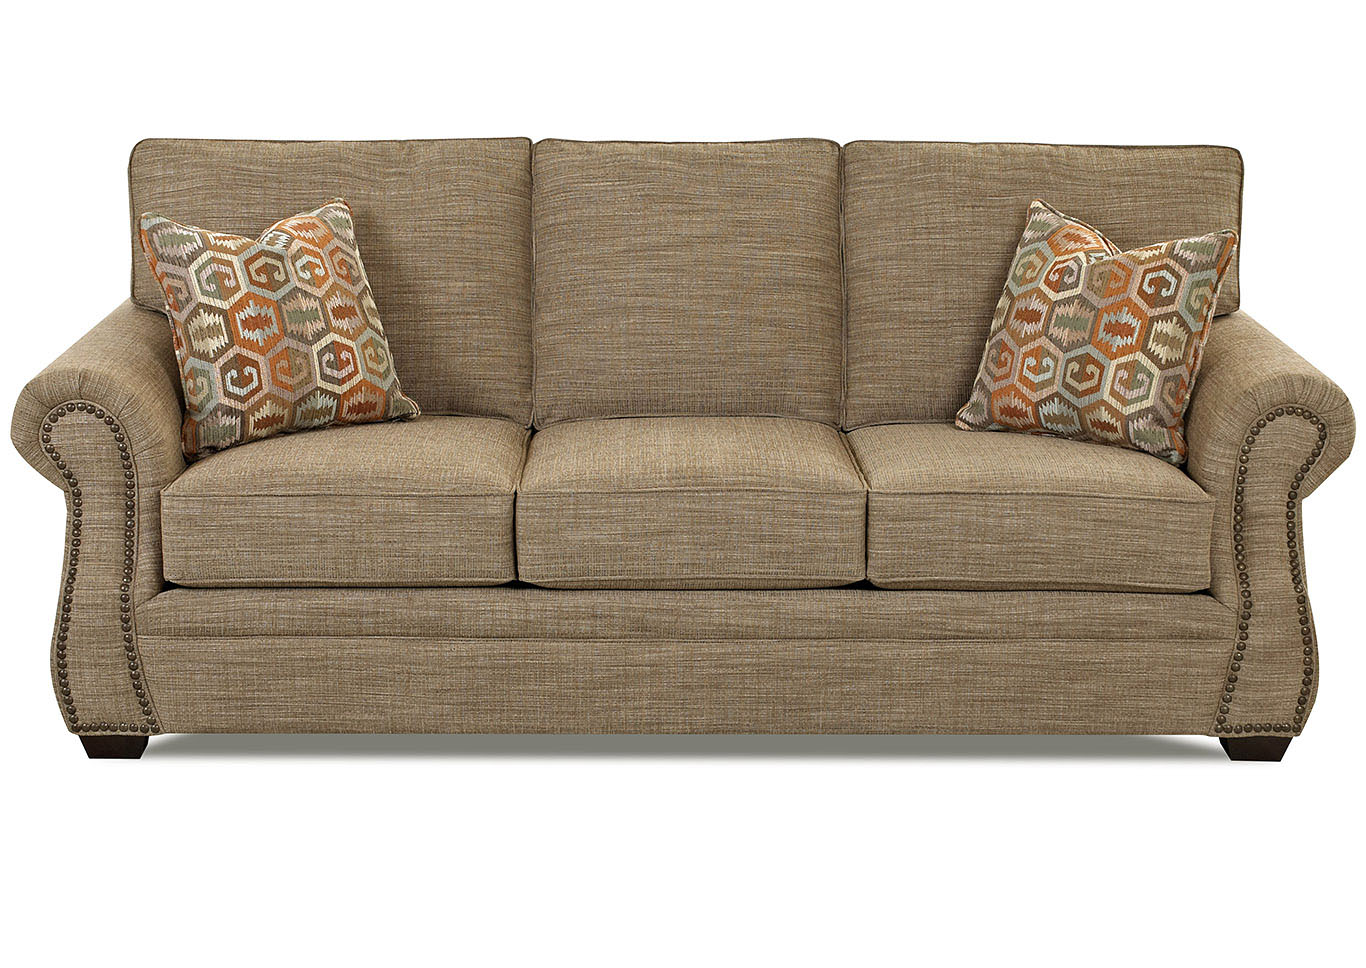 Jasper Medium Brown Stationary Fabric Sofa,Klaussner Home Furnishings